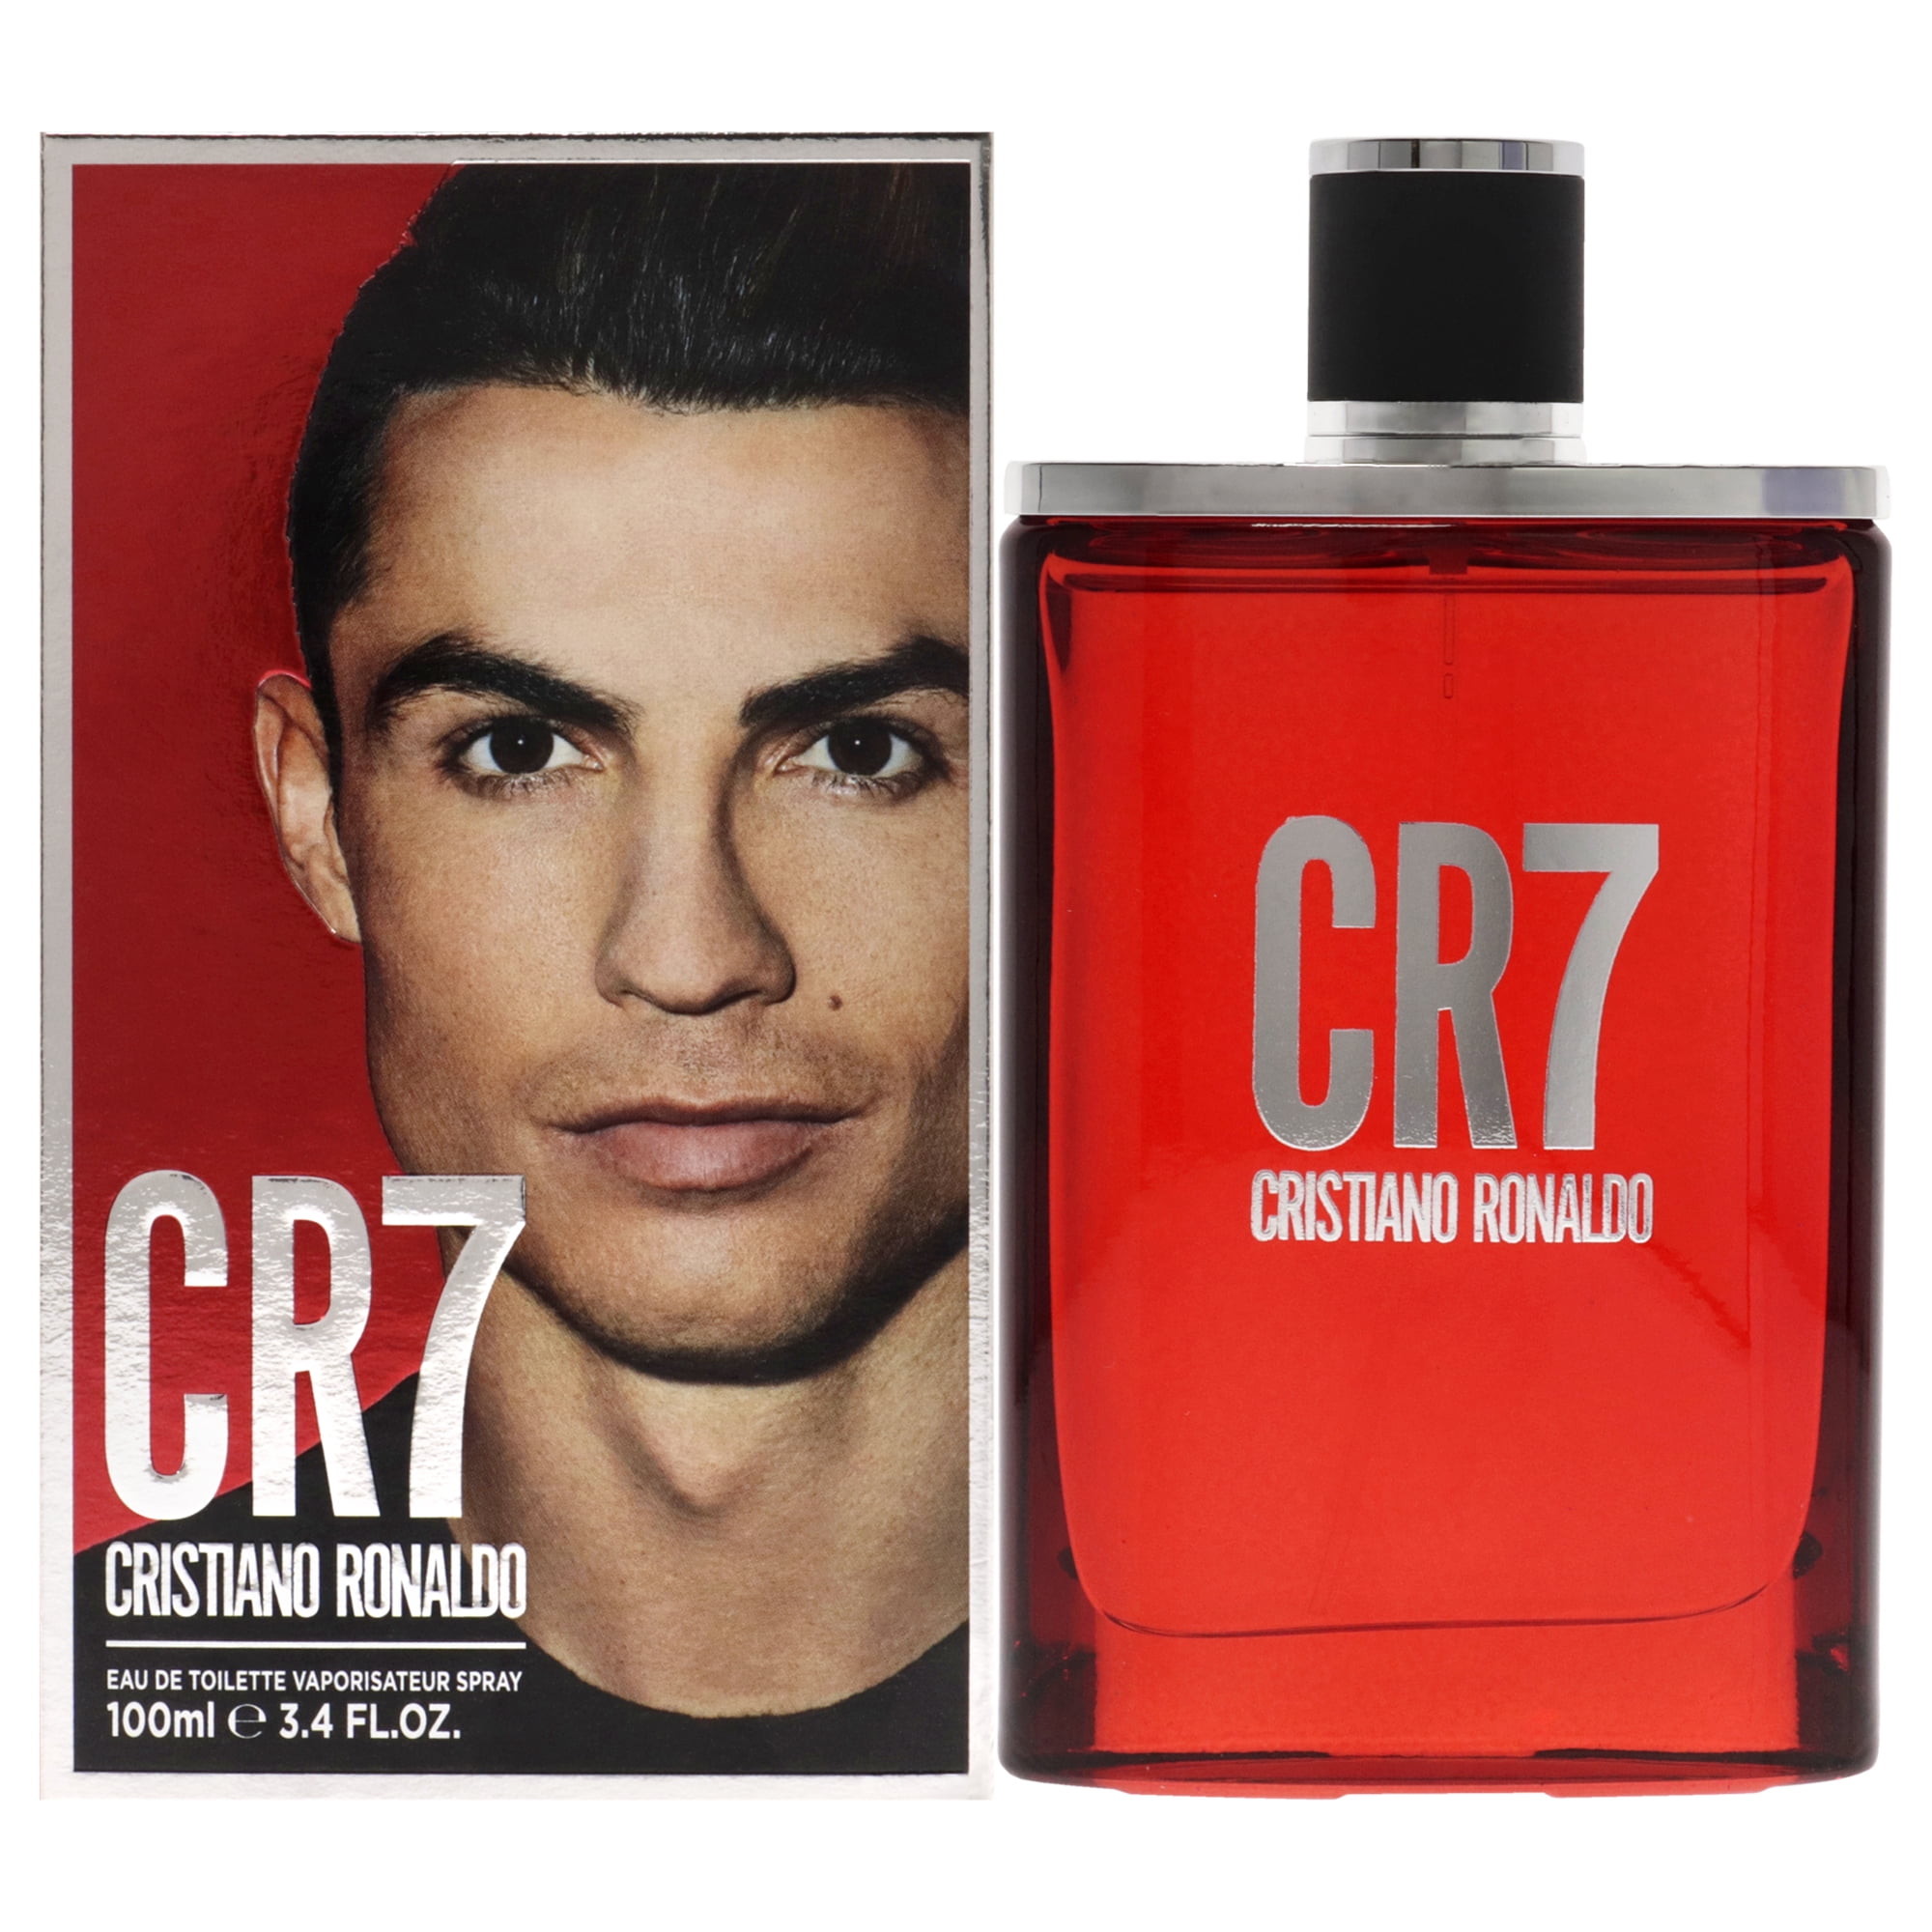 Cristiano Ronaldo Perfume And Body Mist - Buy Cristiano Ronaldo